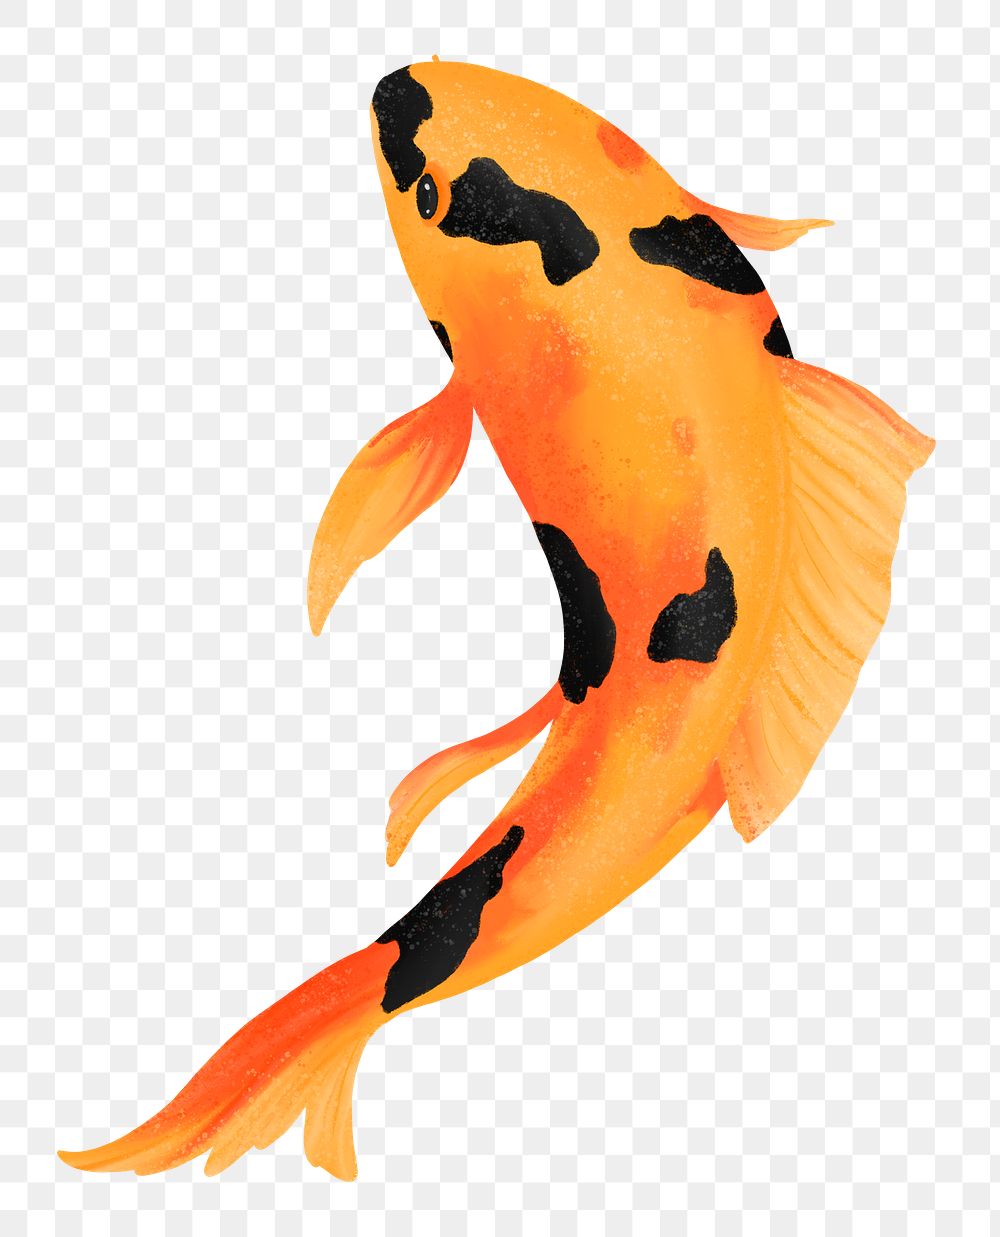 Koi fish png sticker, animal illustration, transparent background